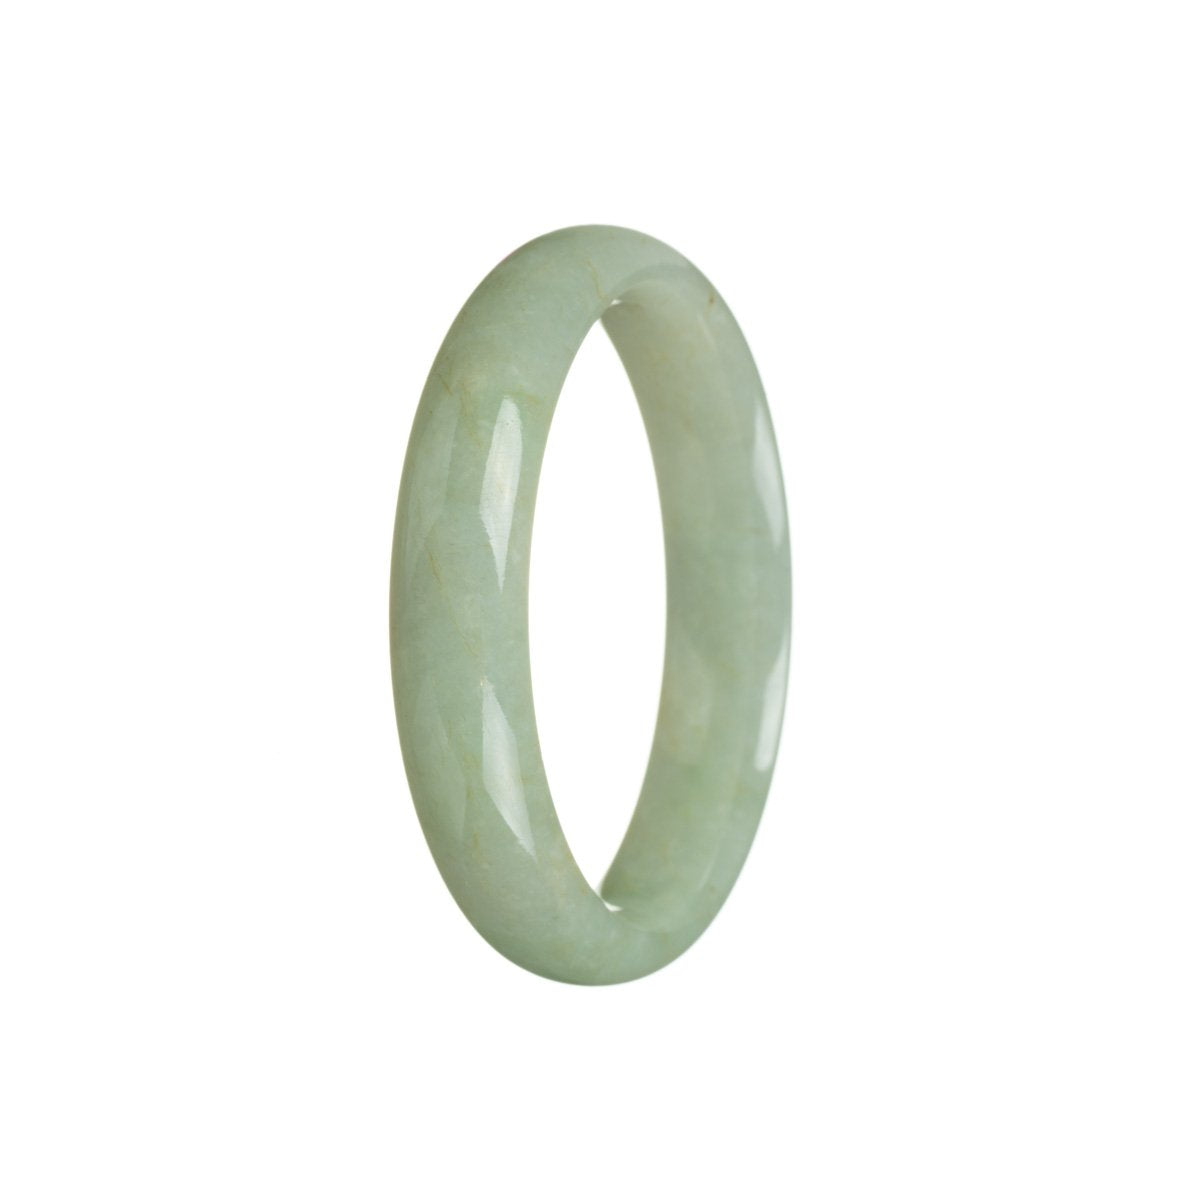 A light green jadeite bangle bracelet with a half moon shape, measuring 55mm in diameter.